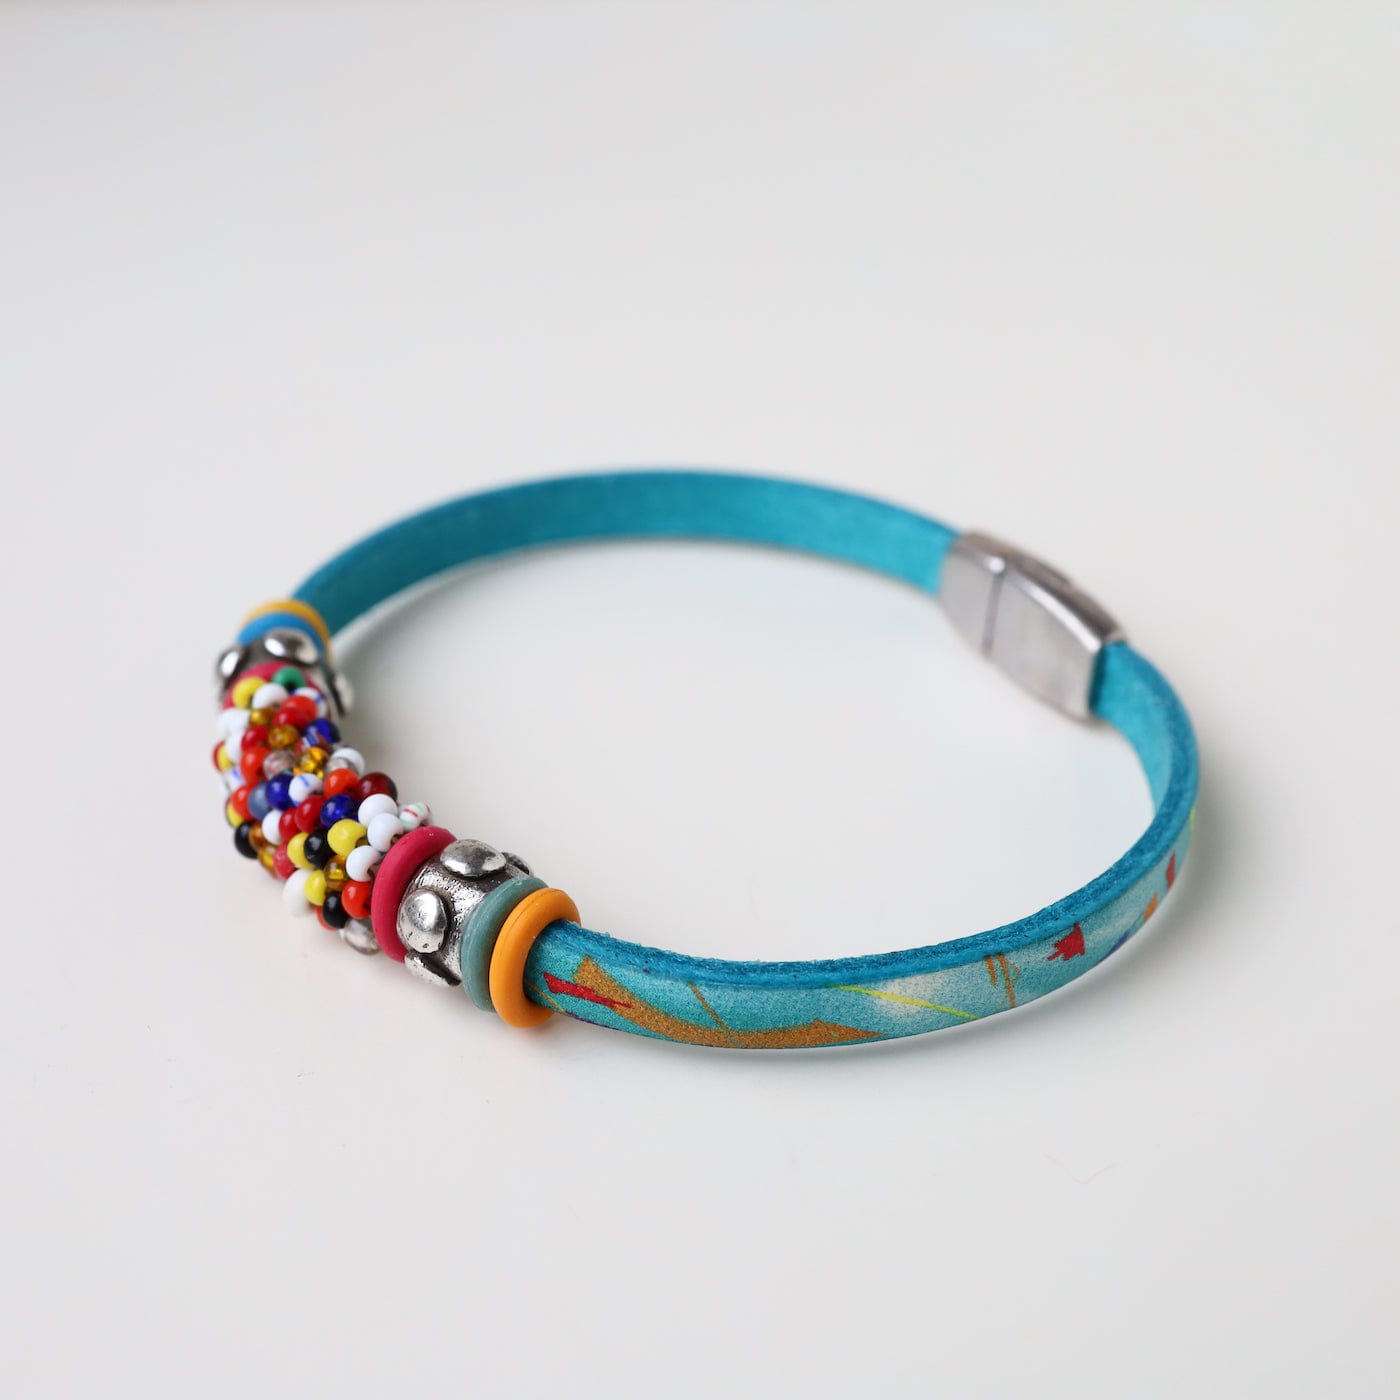 BRC-JM Hand Stitched Vintage & African Beads on Printed Blue Leather Bracelet